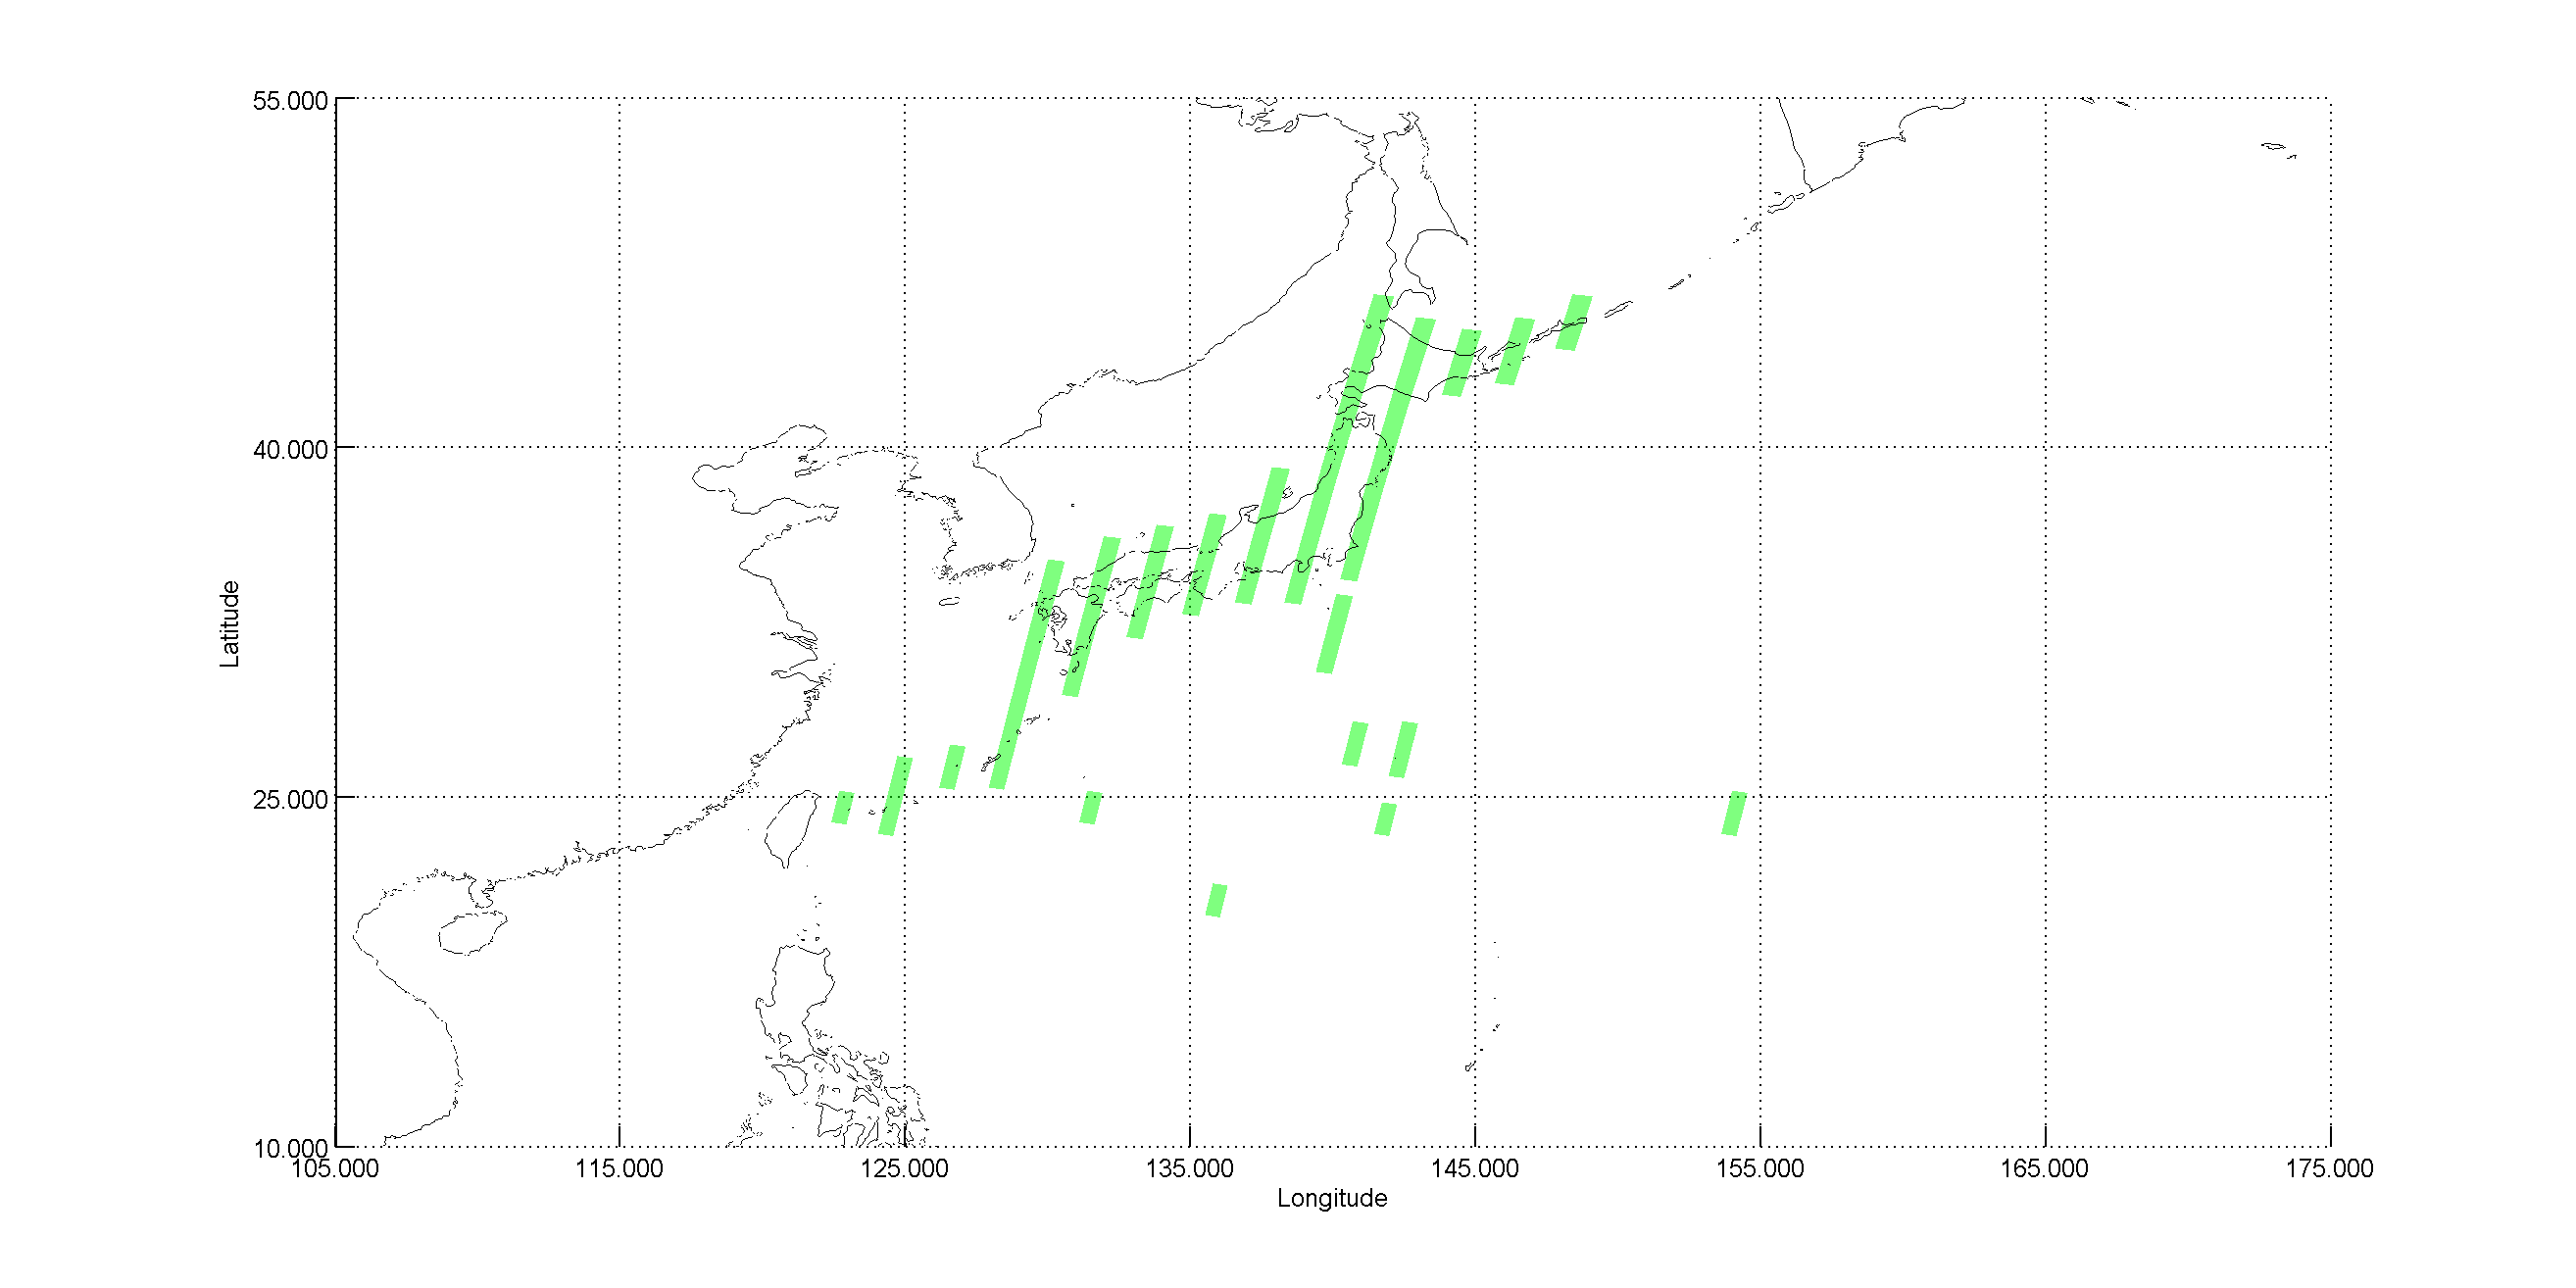 CYCLE_158 - Japan Descending passes